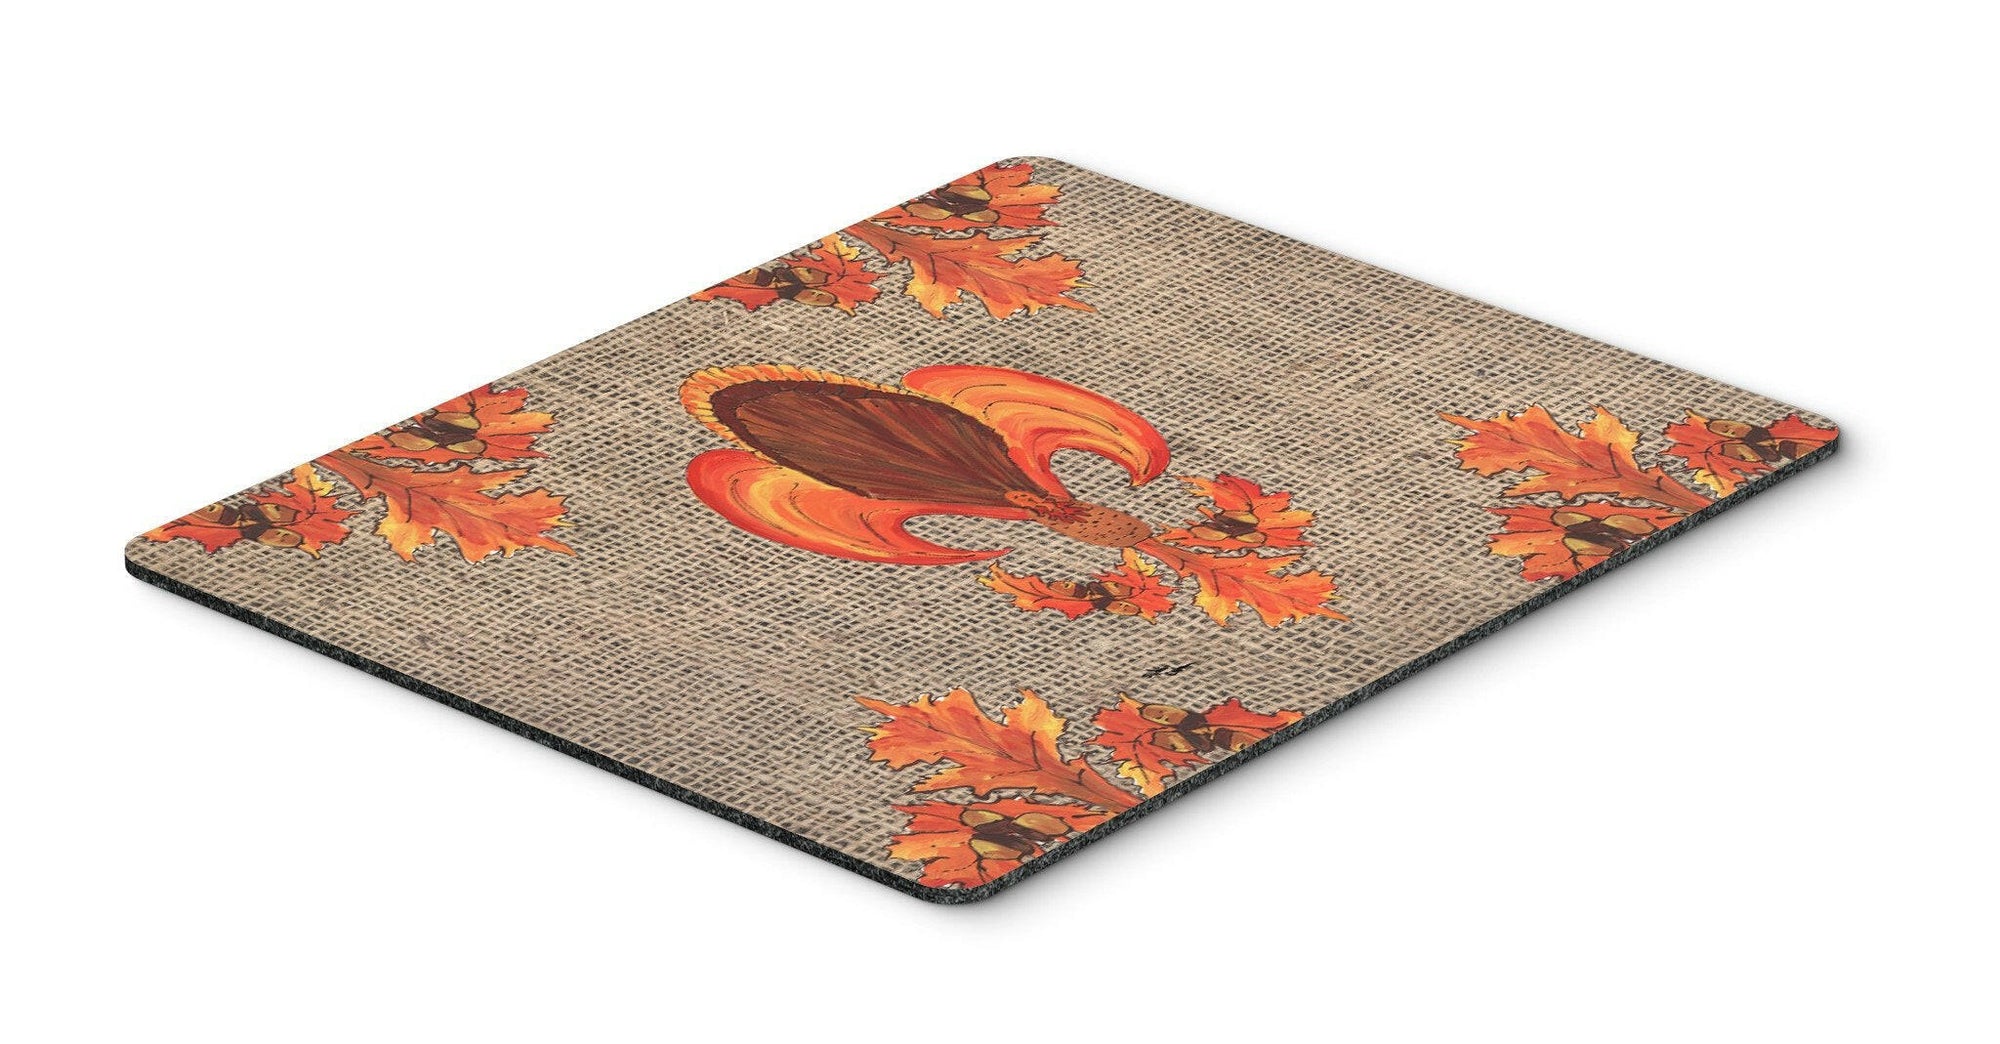 Thanksgiving Turkey Fleur de lis Mouse pad, hot pad, or trivet by Caroline's Treasures